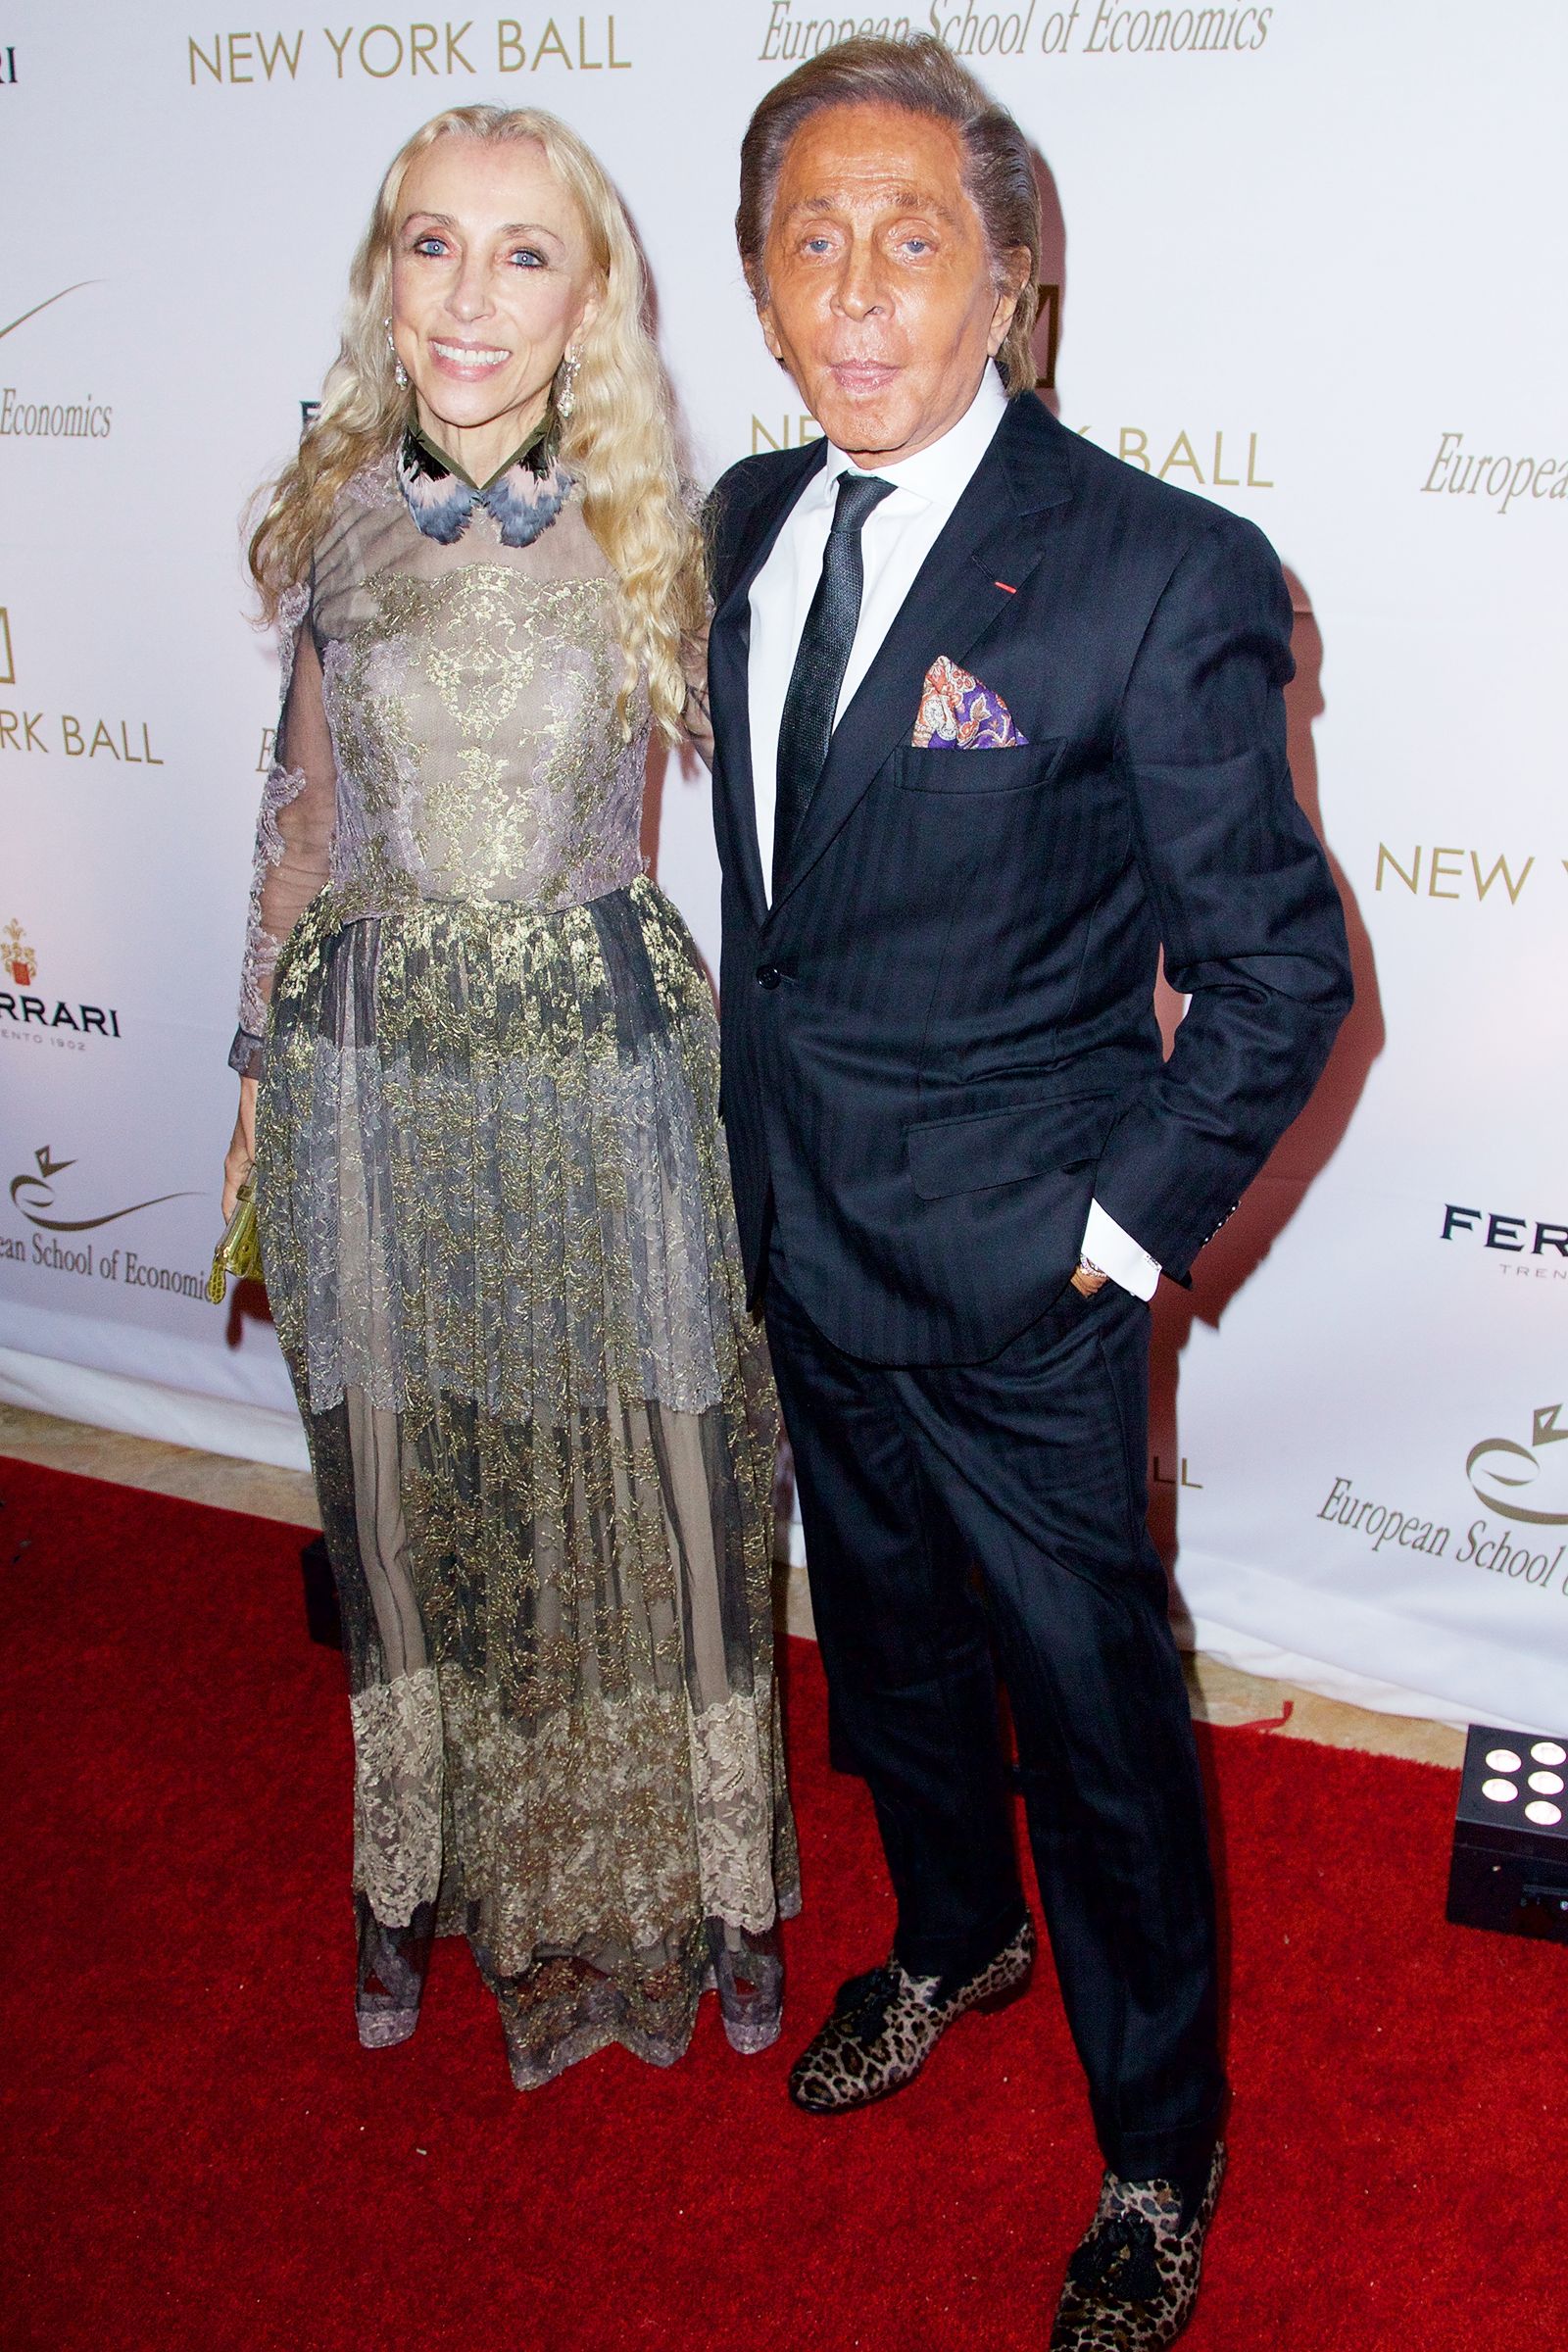 Франка Соццани и Валентино Гаравани на балу The New York Ball, 19 ноября 2014 г.